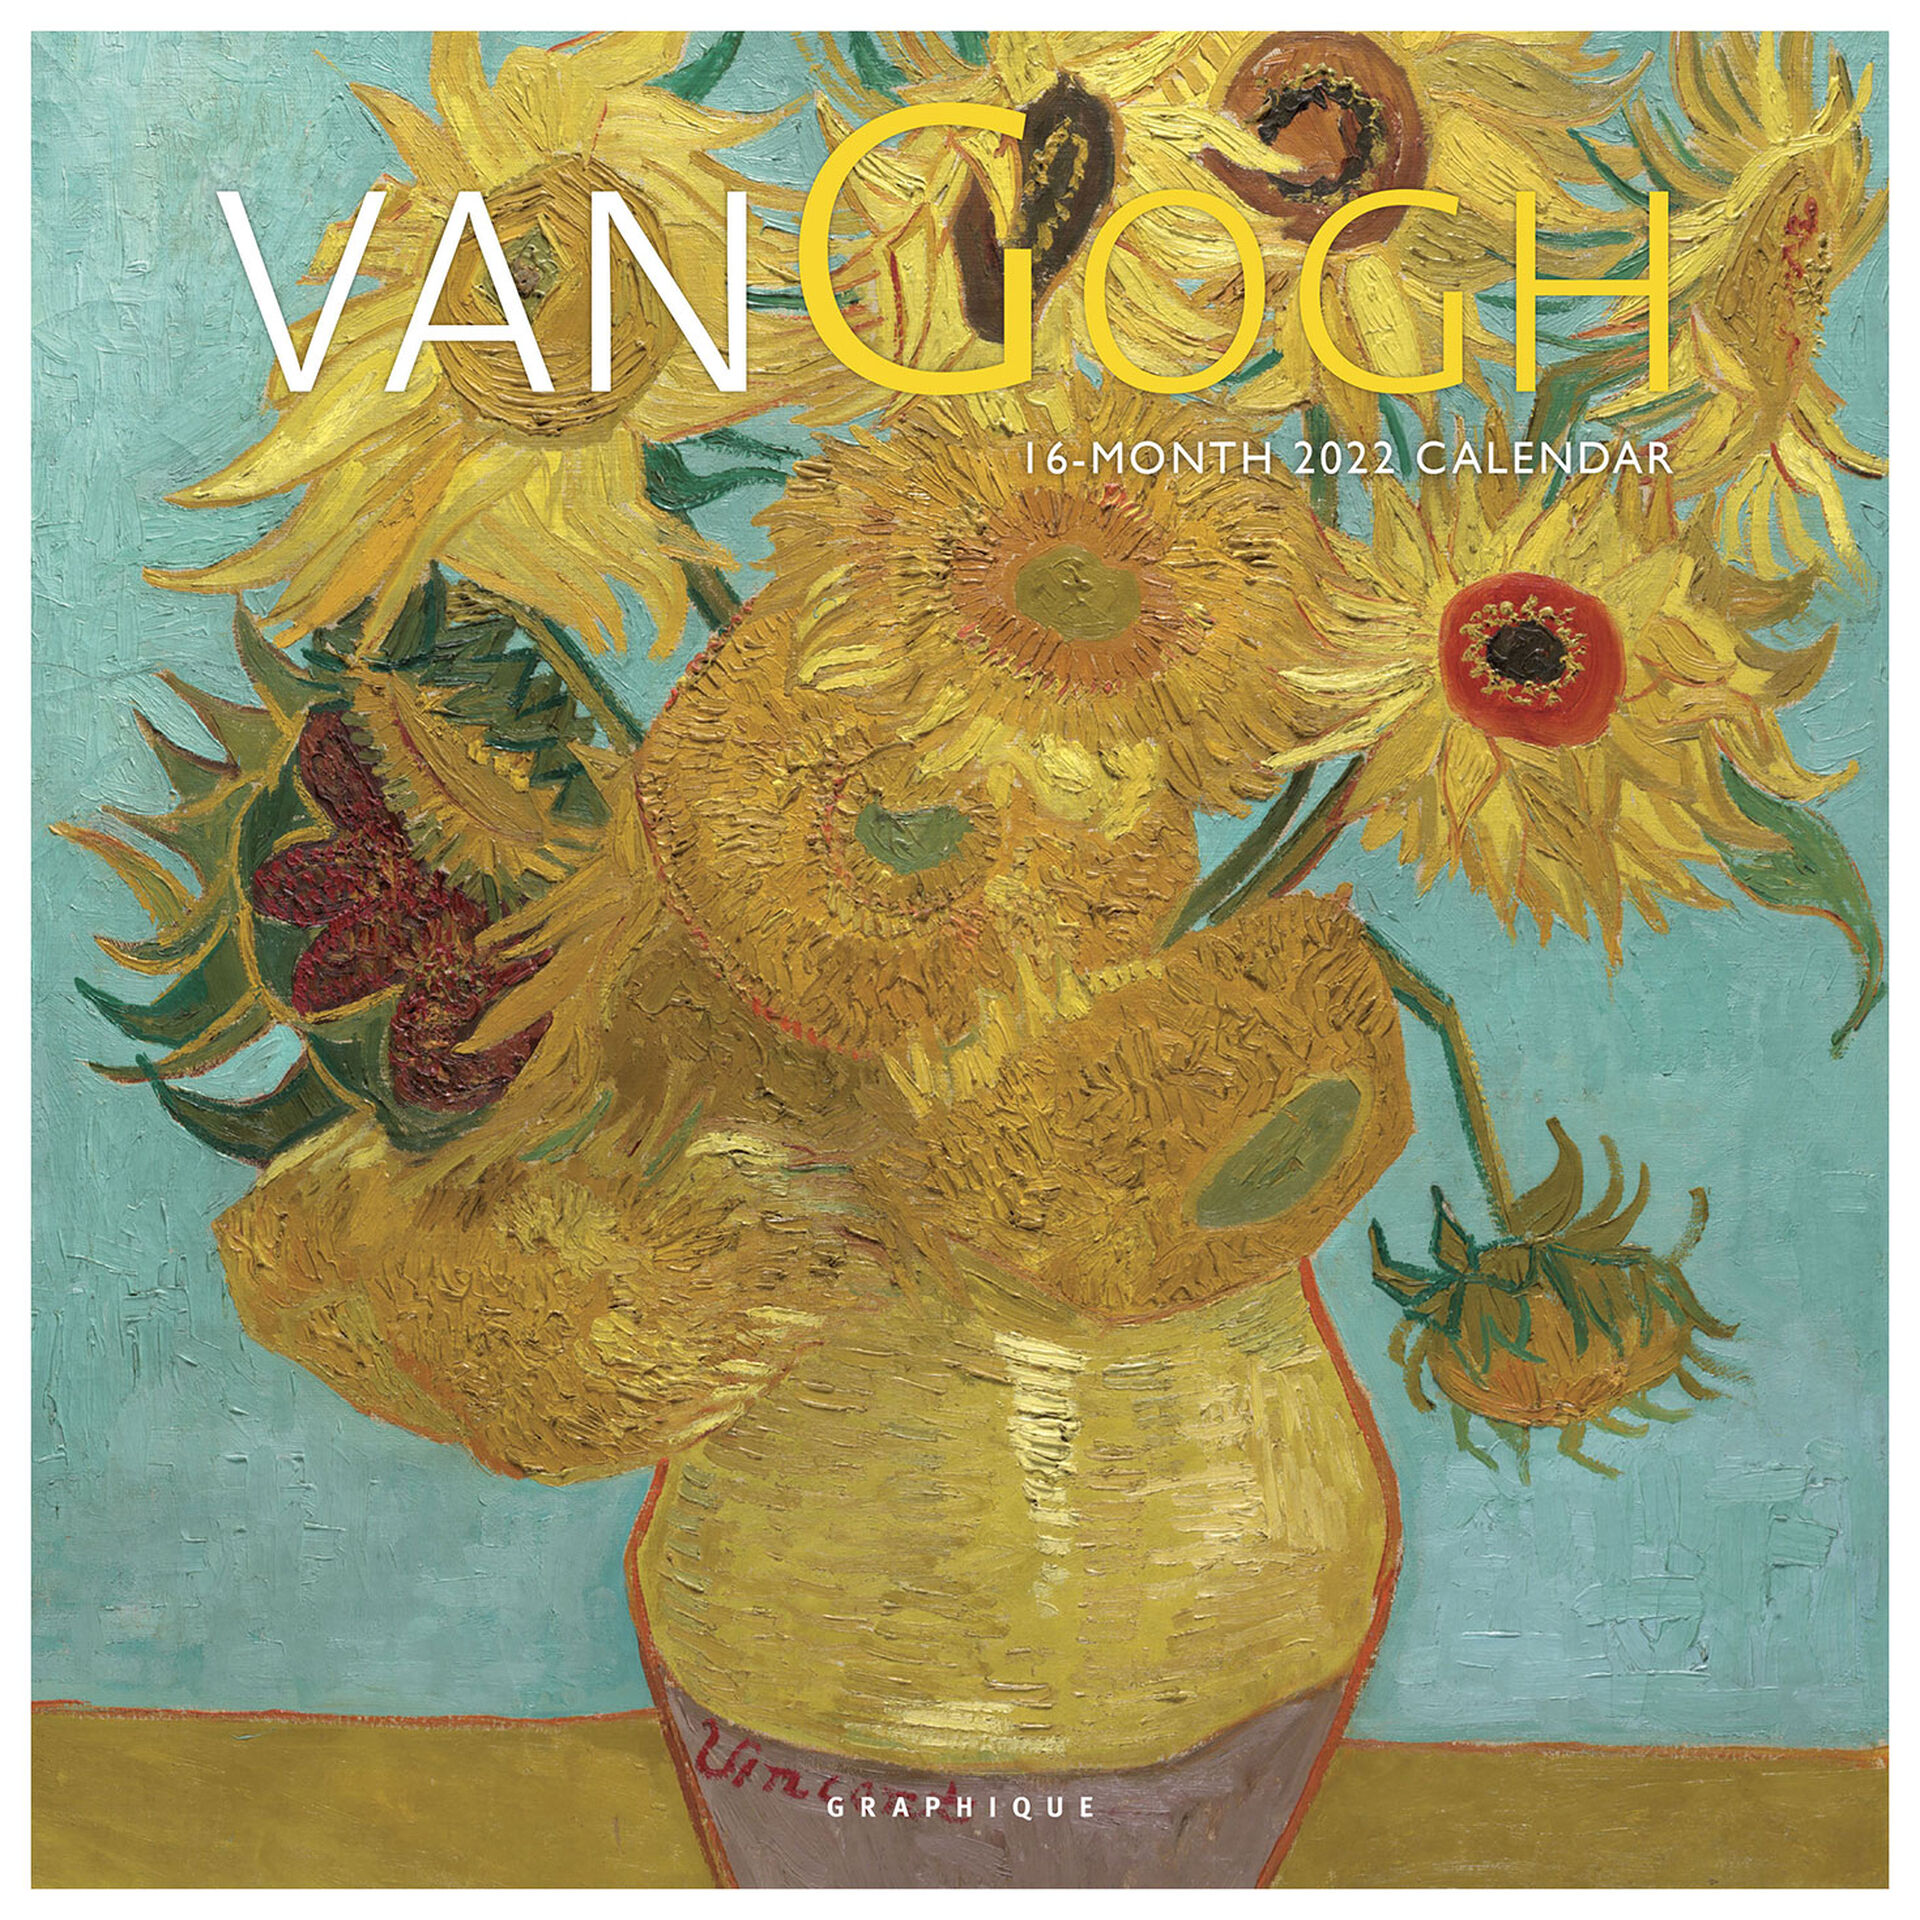 Van Gogh 2022 Wall Calendar, 16-Month - Calendars  Planners - Hallmark